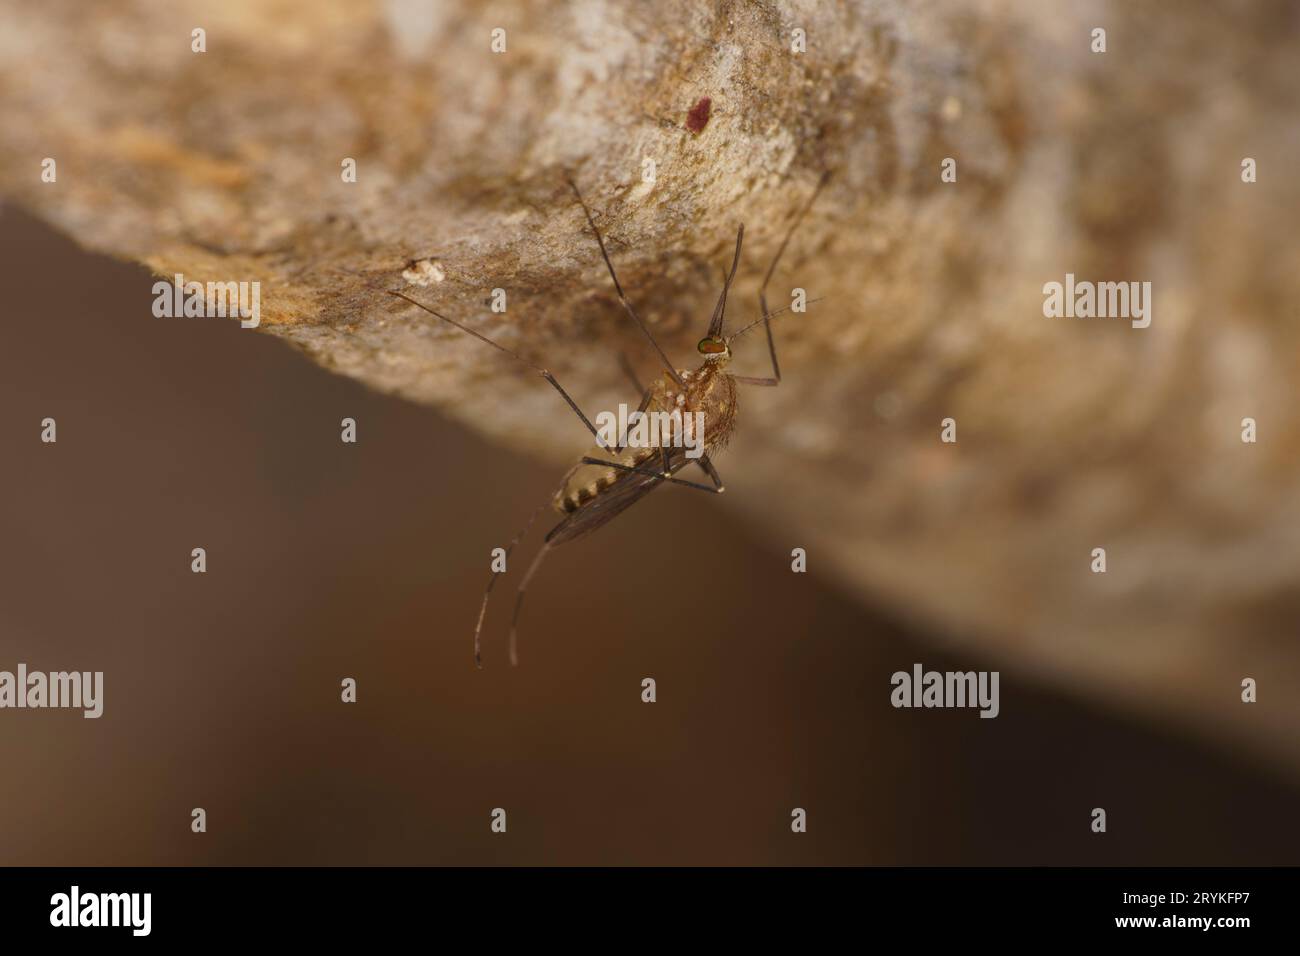 Familie Culicinae Mosquito wilde Natur Insektenfotografie, Bild, Tapete Stockfoto